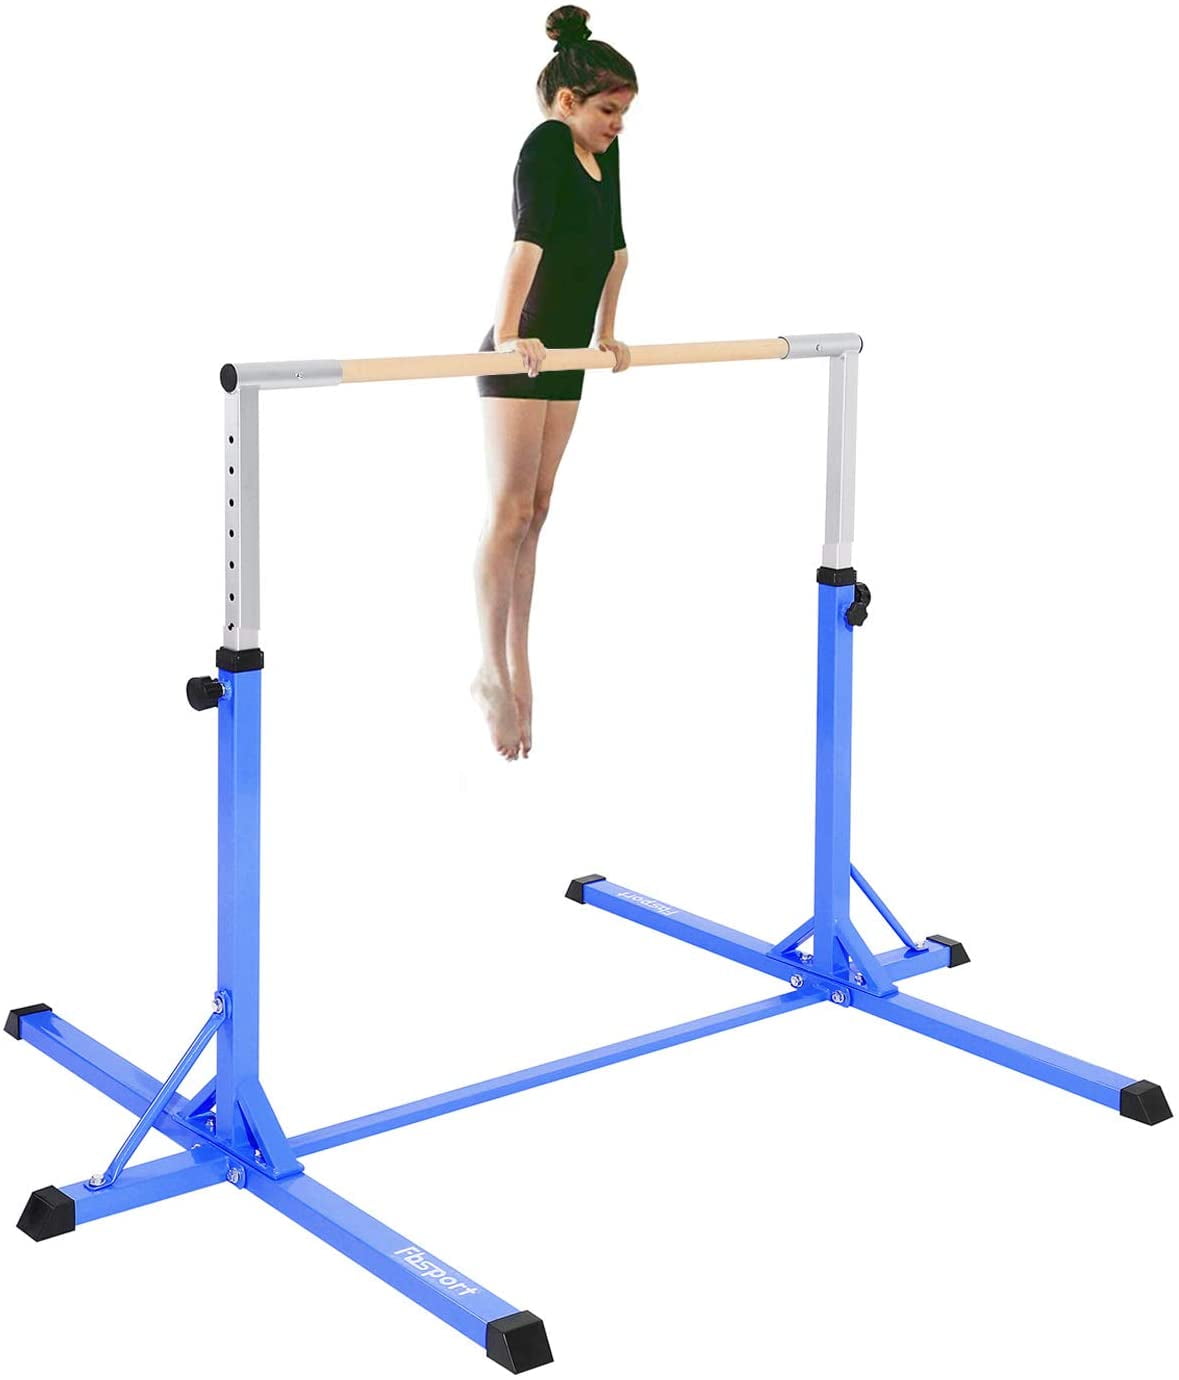 Fbsport  Folding Gymnastics Bar Training Bar gymnastics equipment for kids 